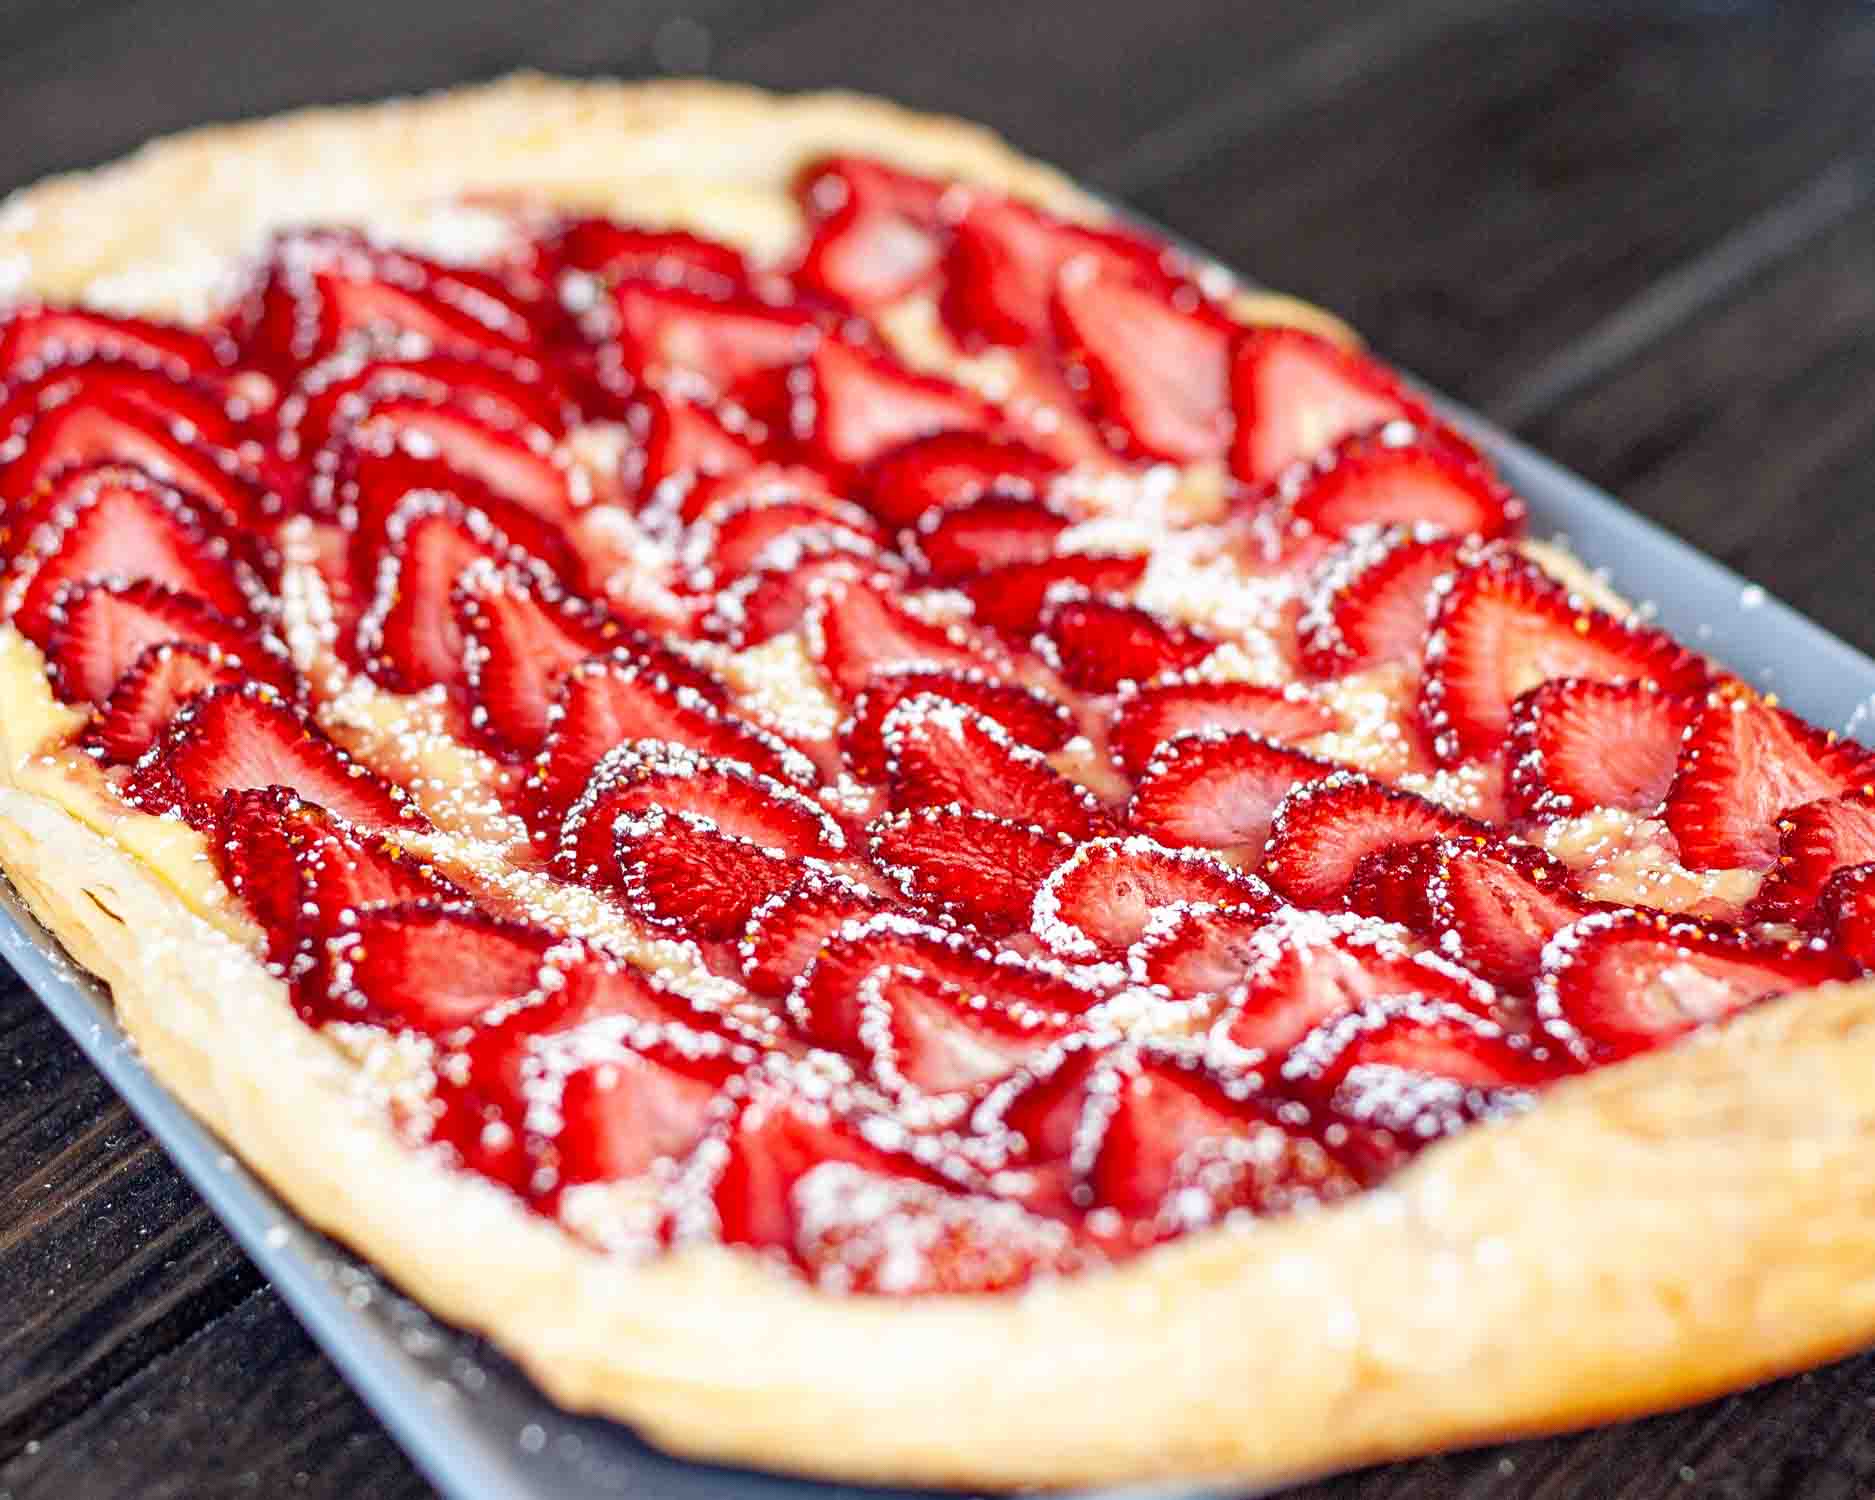 a beautiful strawberry tart on a blue plate.